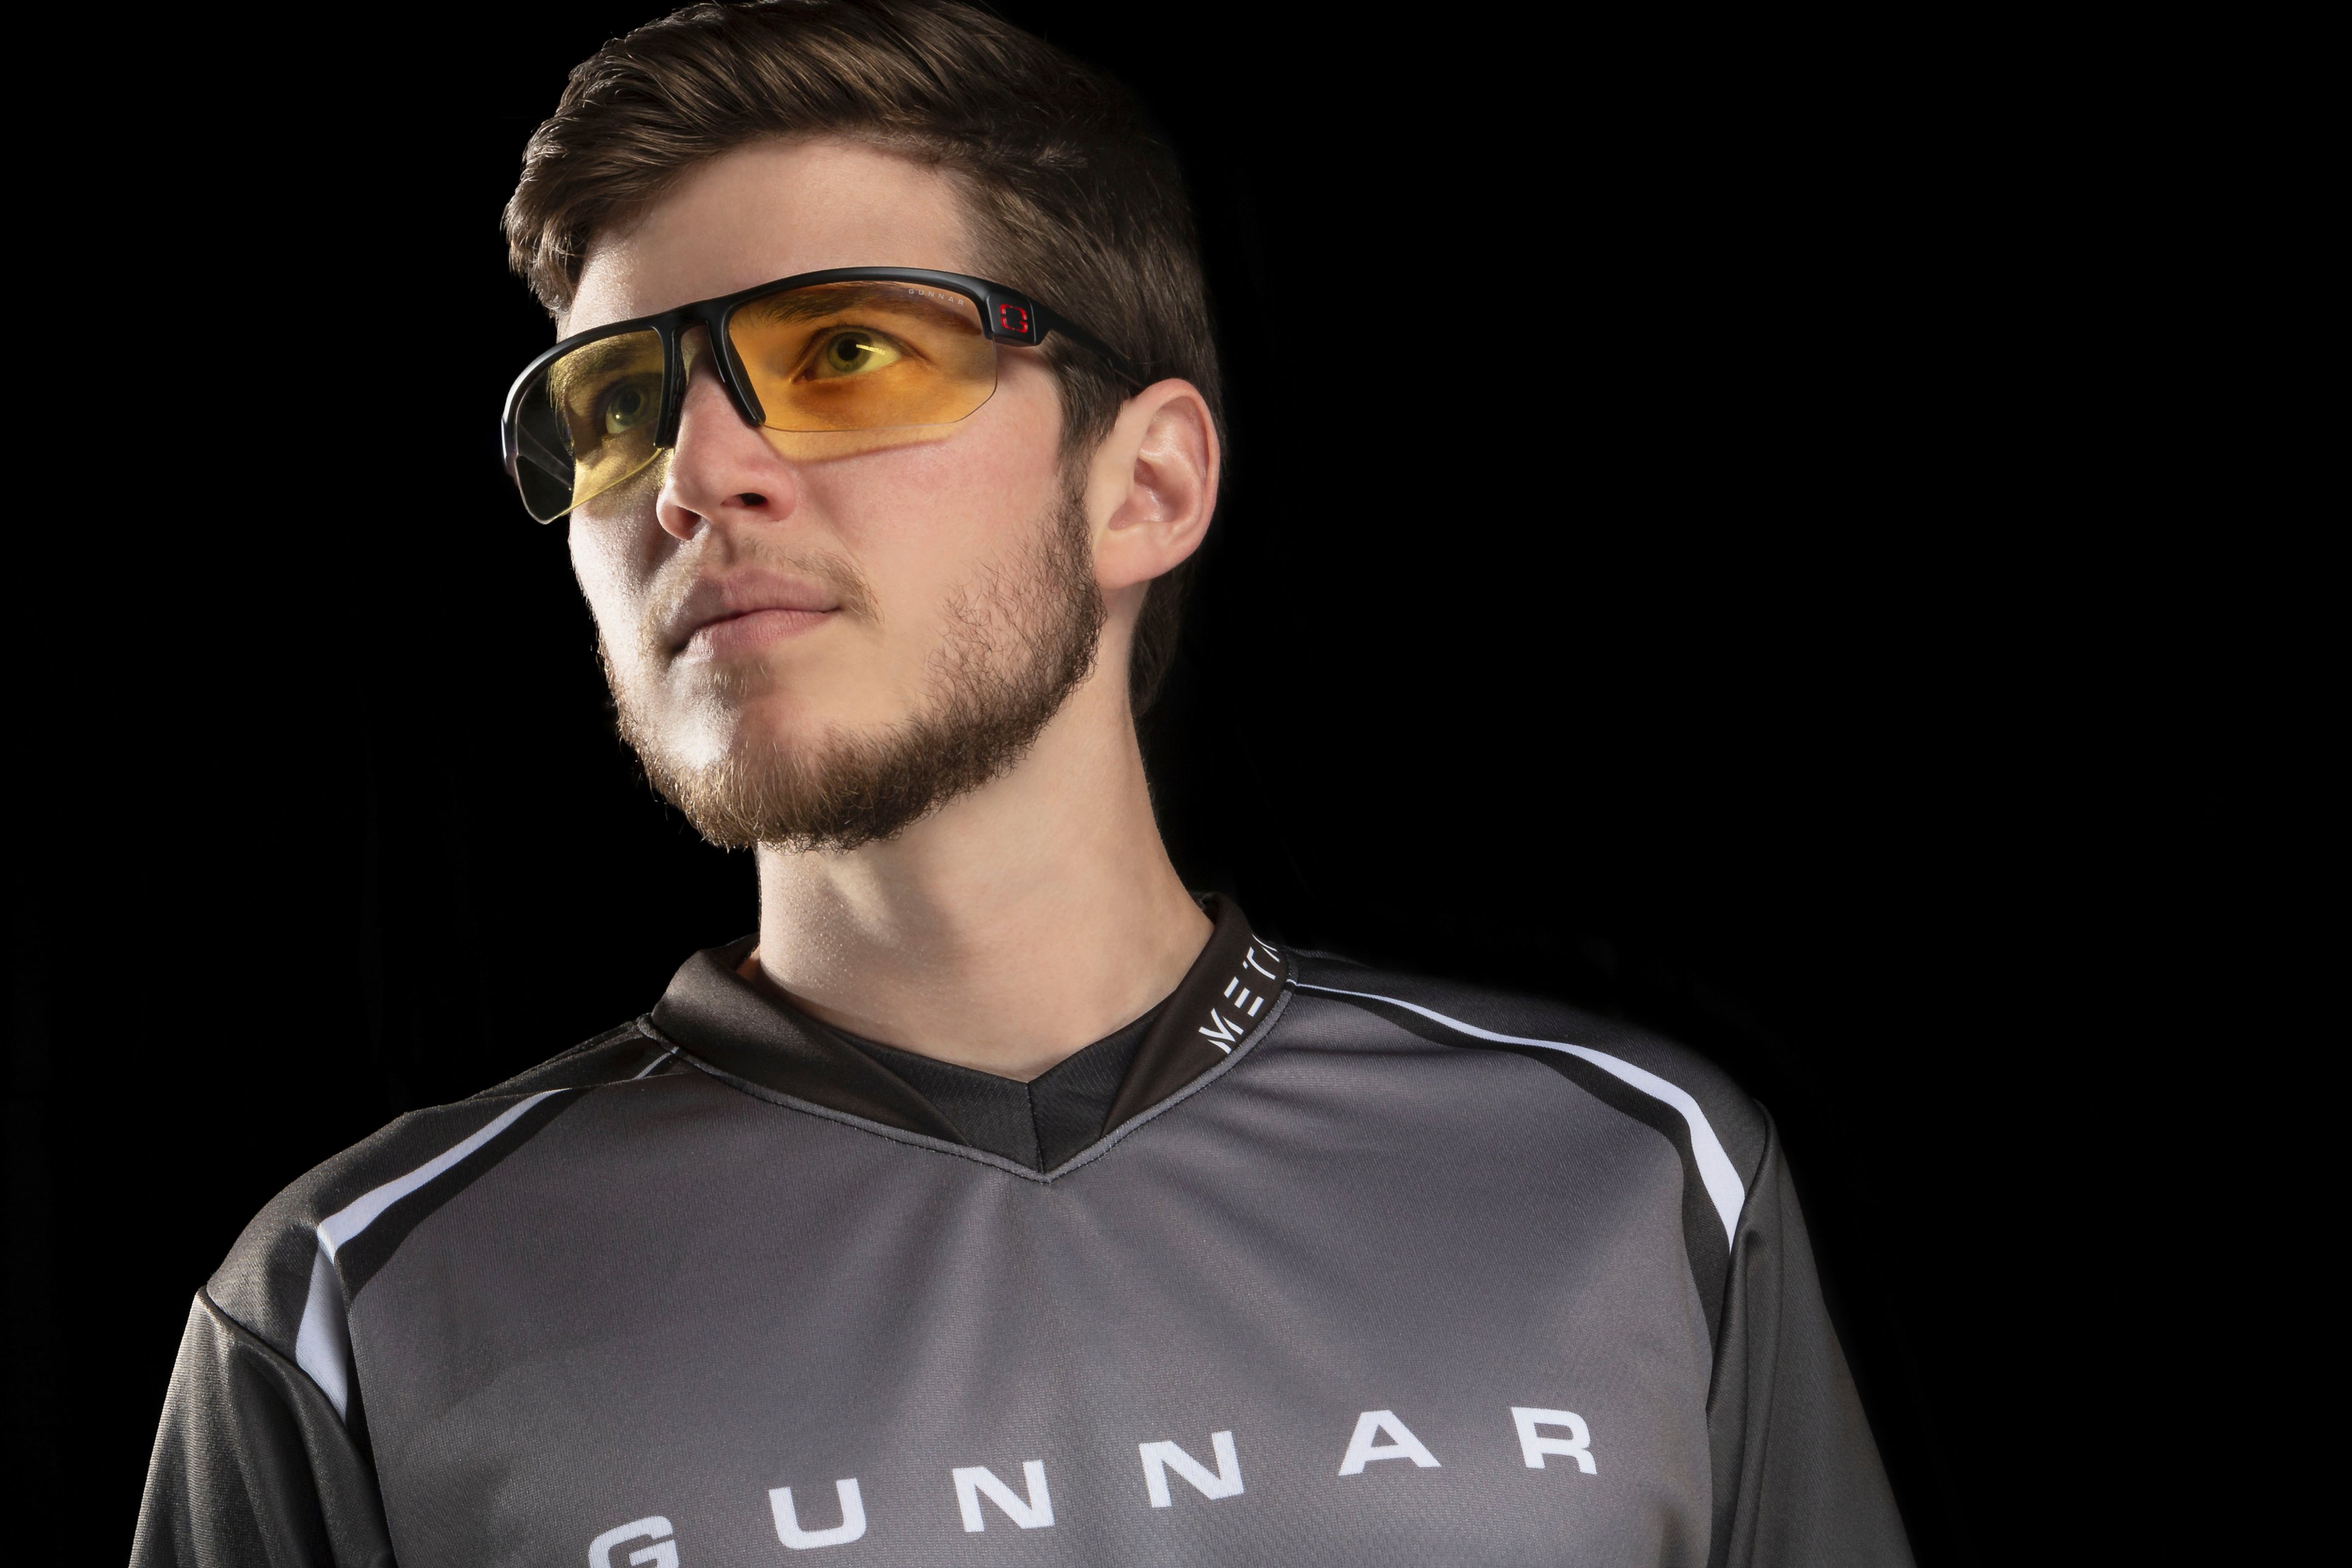 GUNNAR - Gafas para juegos Torpedo con revestimiento antirreflectante, lentes ámbar - Onyx